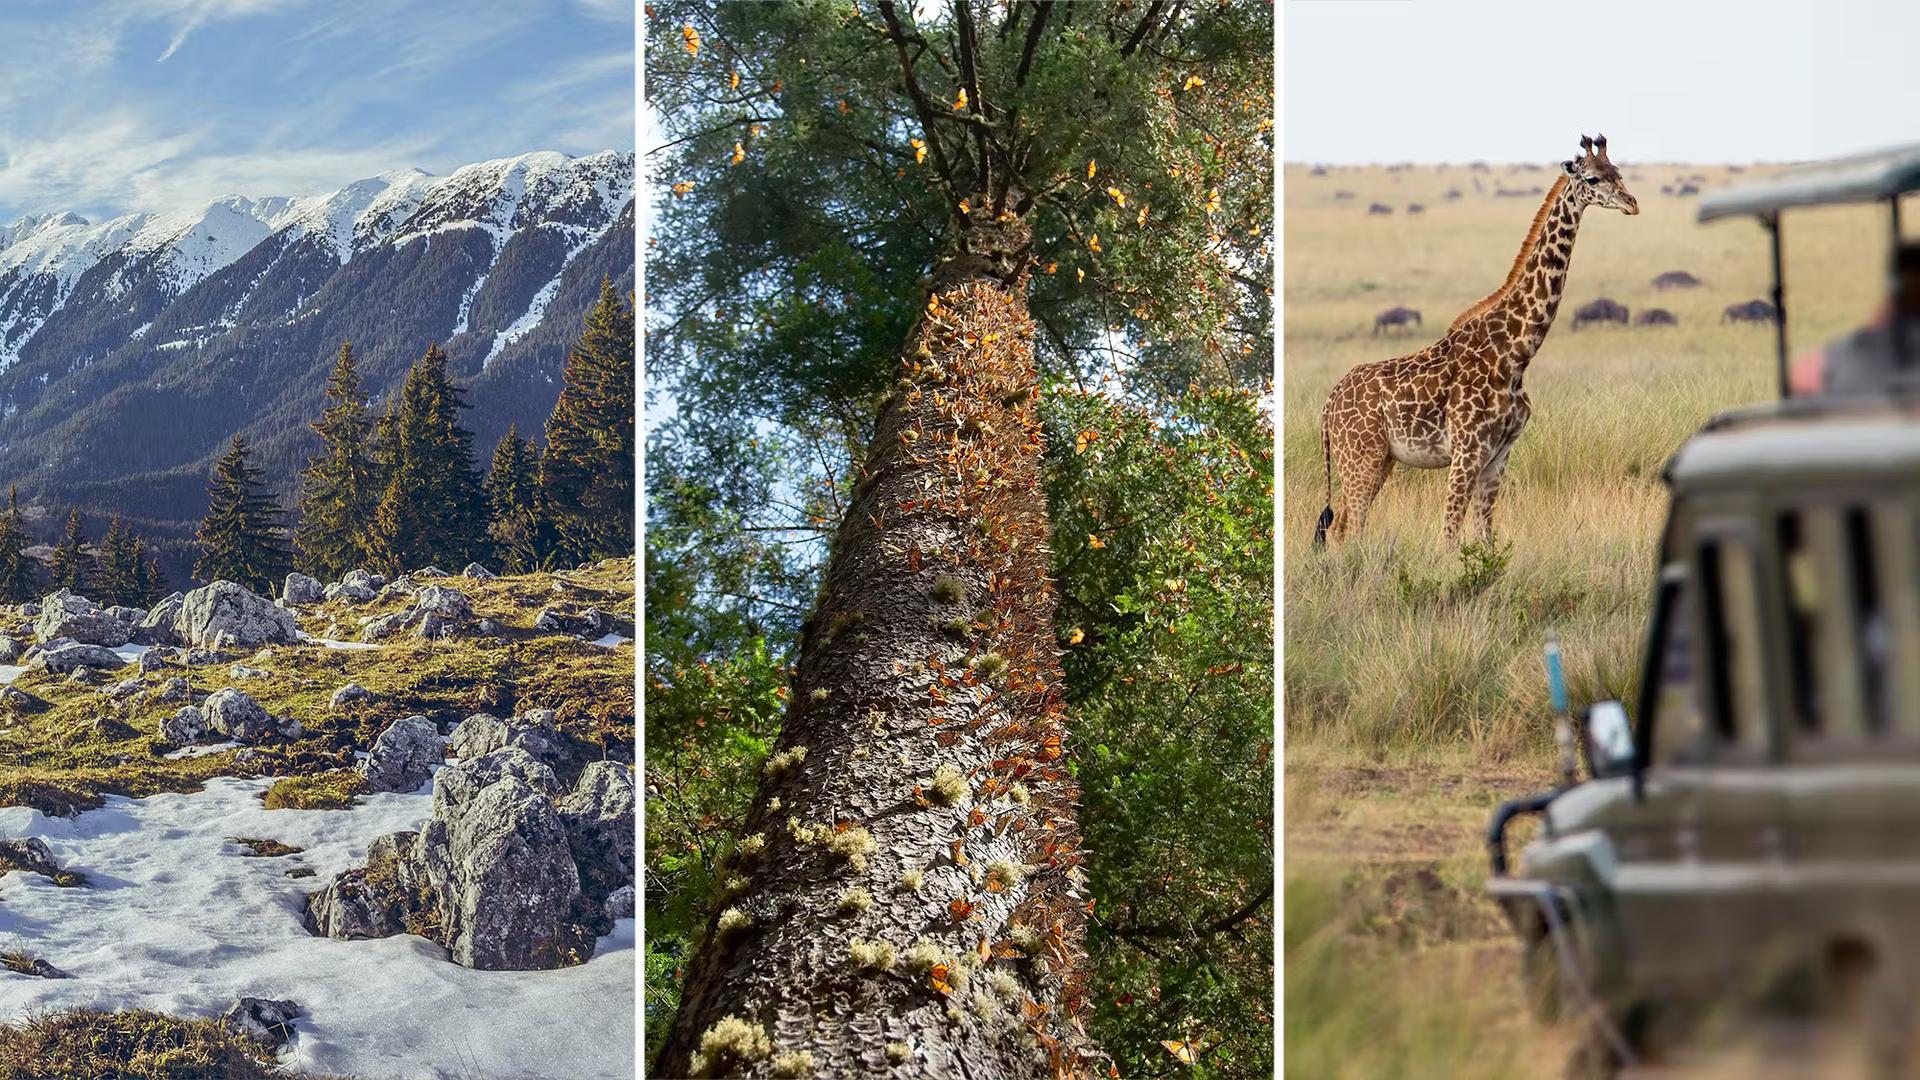 Zanoaga meadow in Romania, hundreds of monarch butterflies in Michoacán, Mexico, and a giraffe seen on safari in Tanzania. 